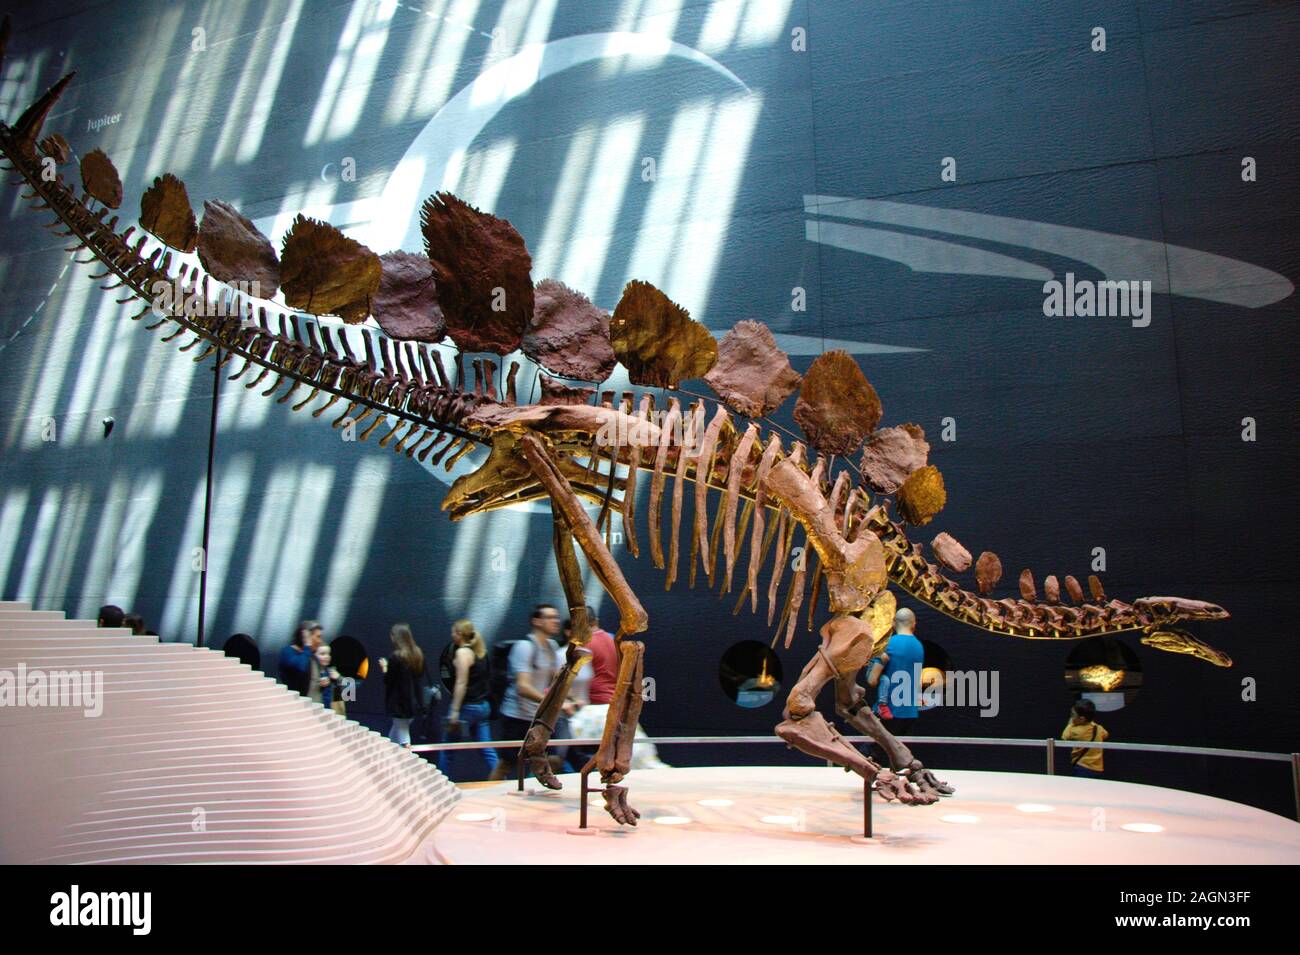 Stegosaurus sp. skeleton. Museum of natural history, London, UK. Exhibited since 2015. Stock Photo